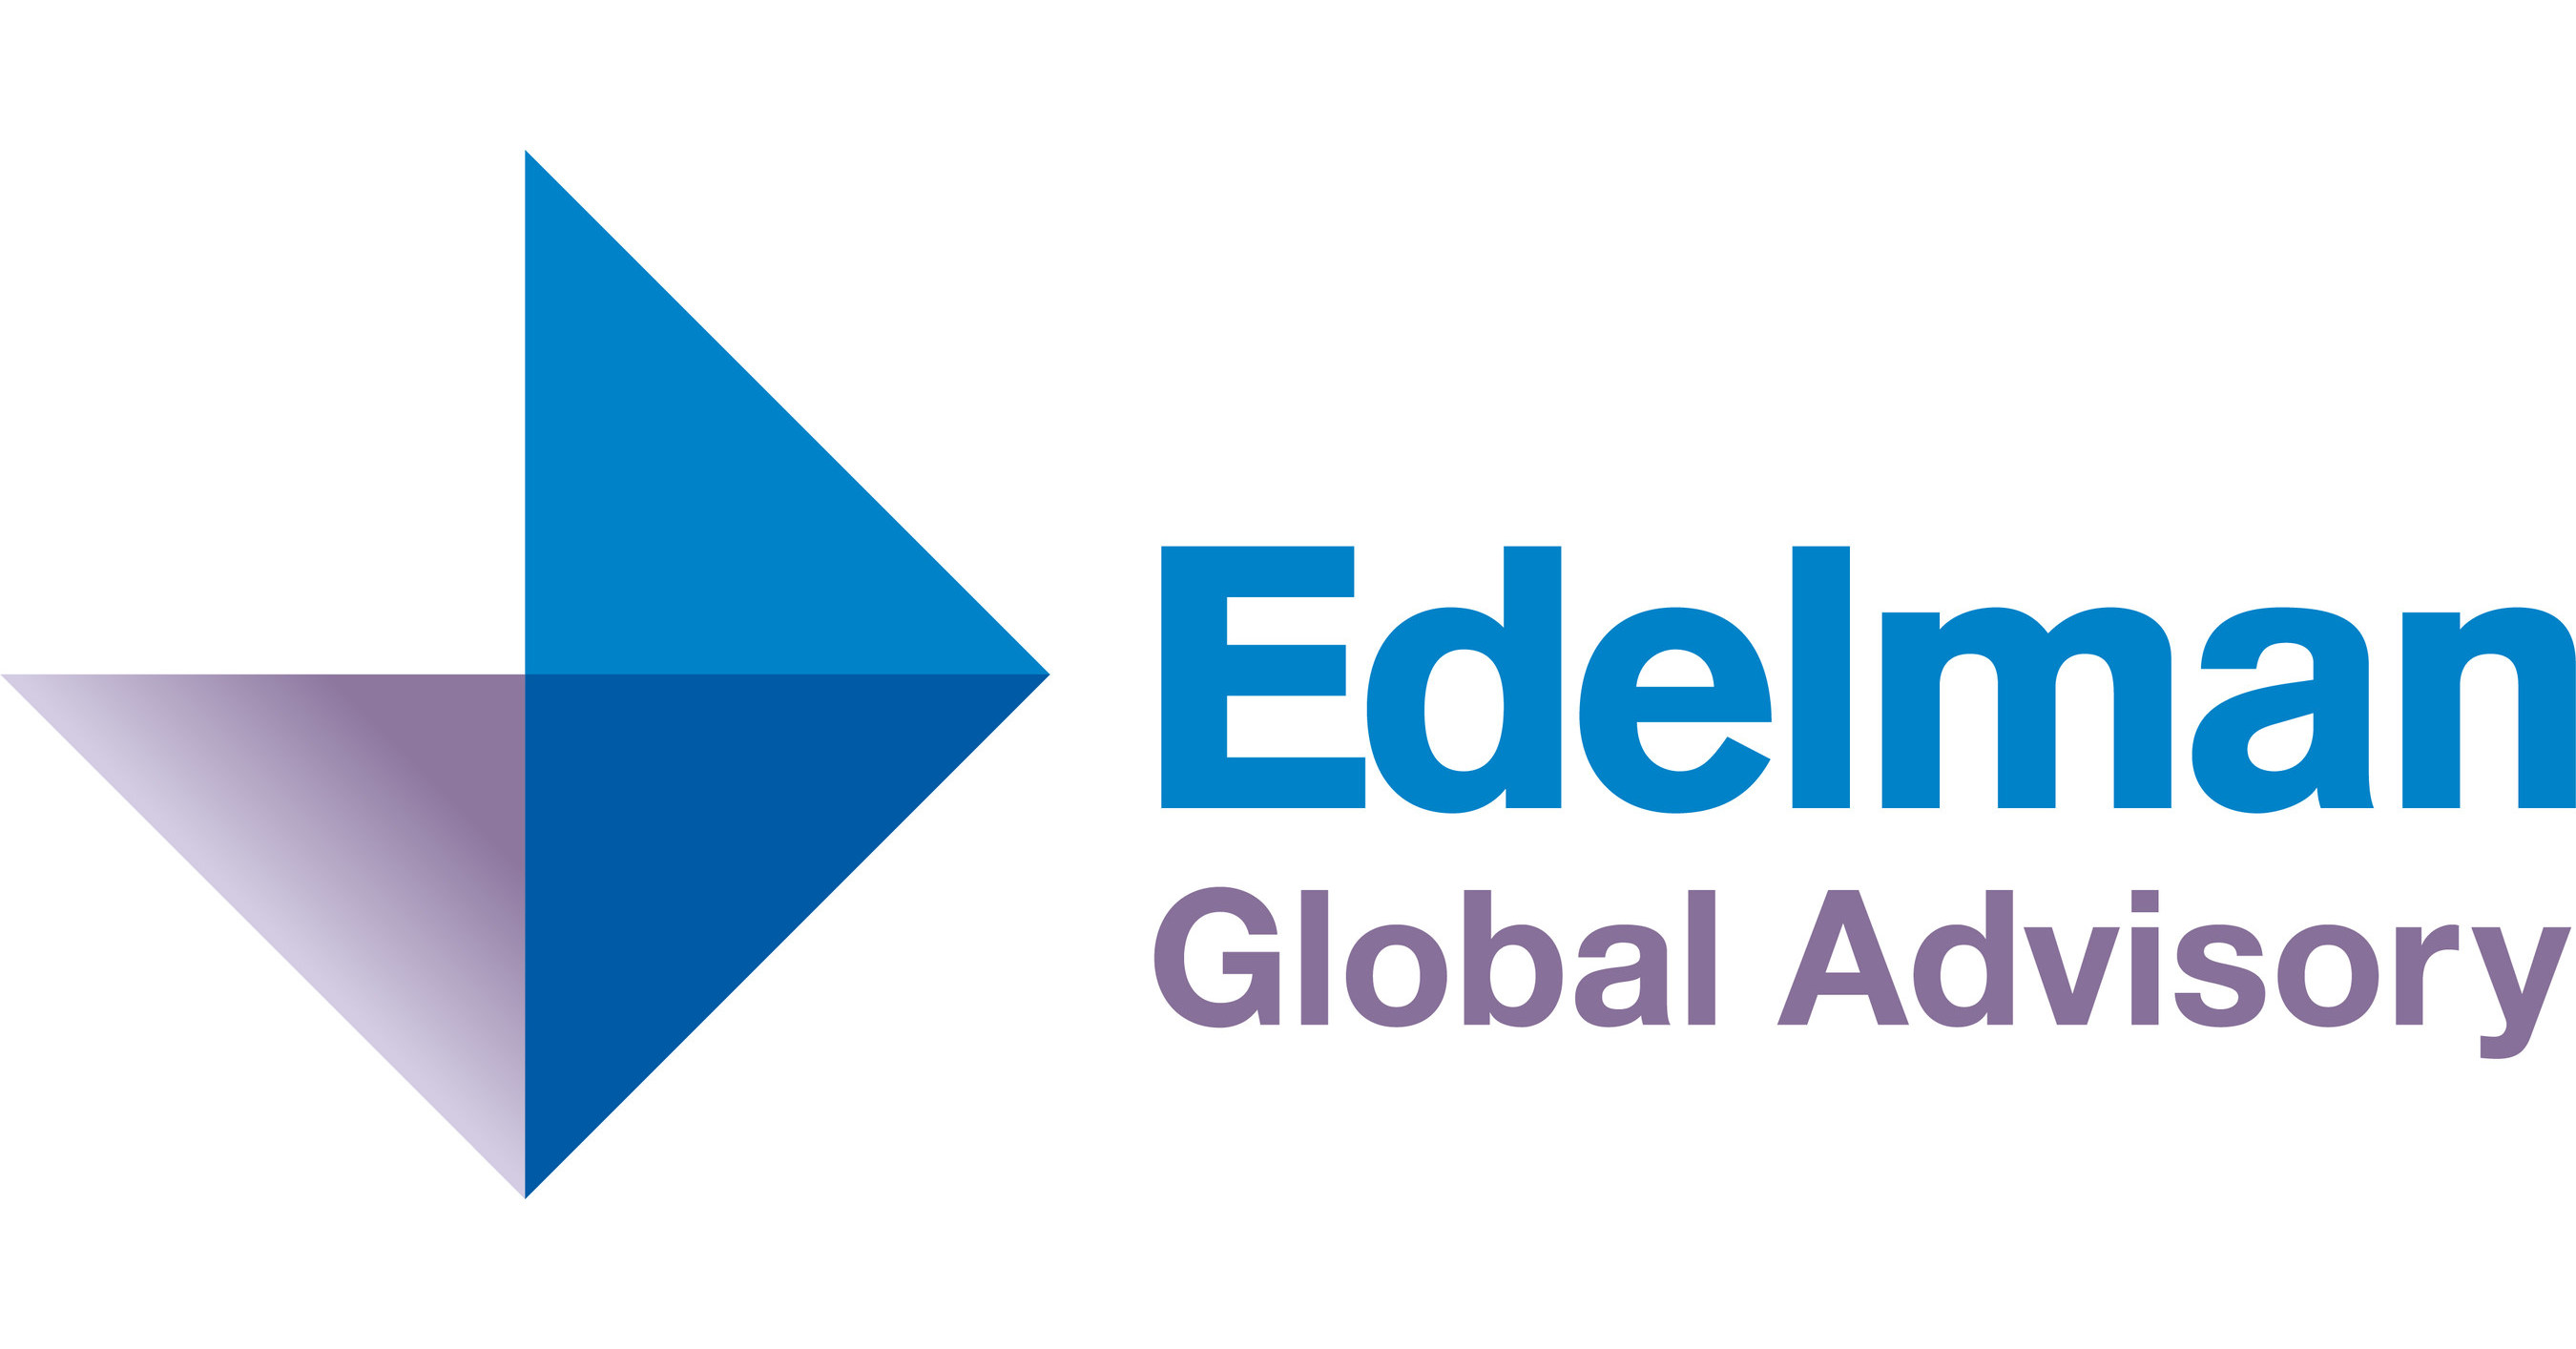 EDELMAN GLOBAL ADVISORY